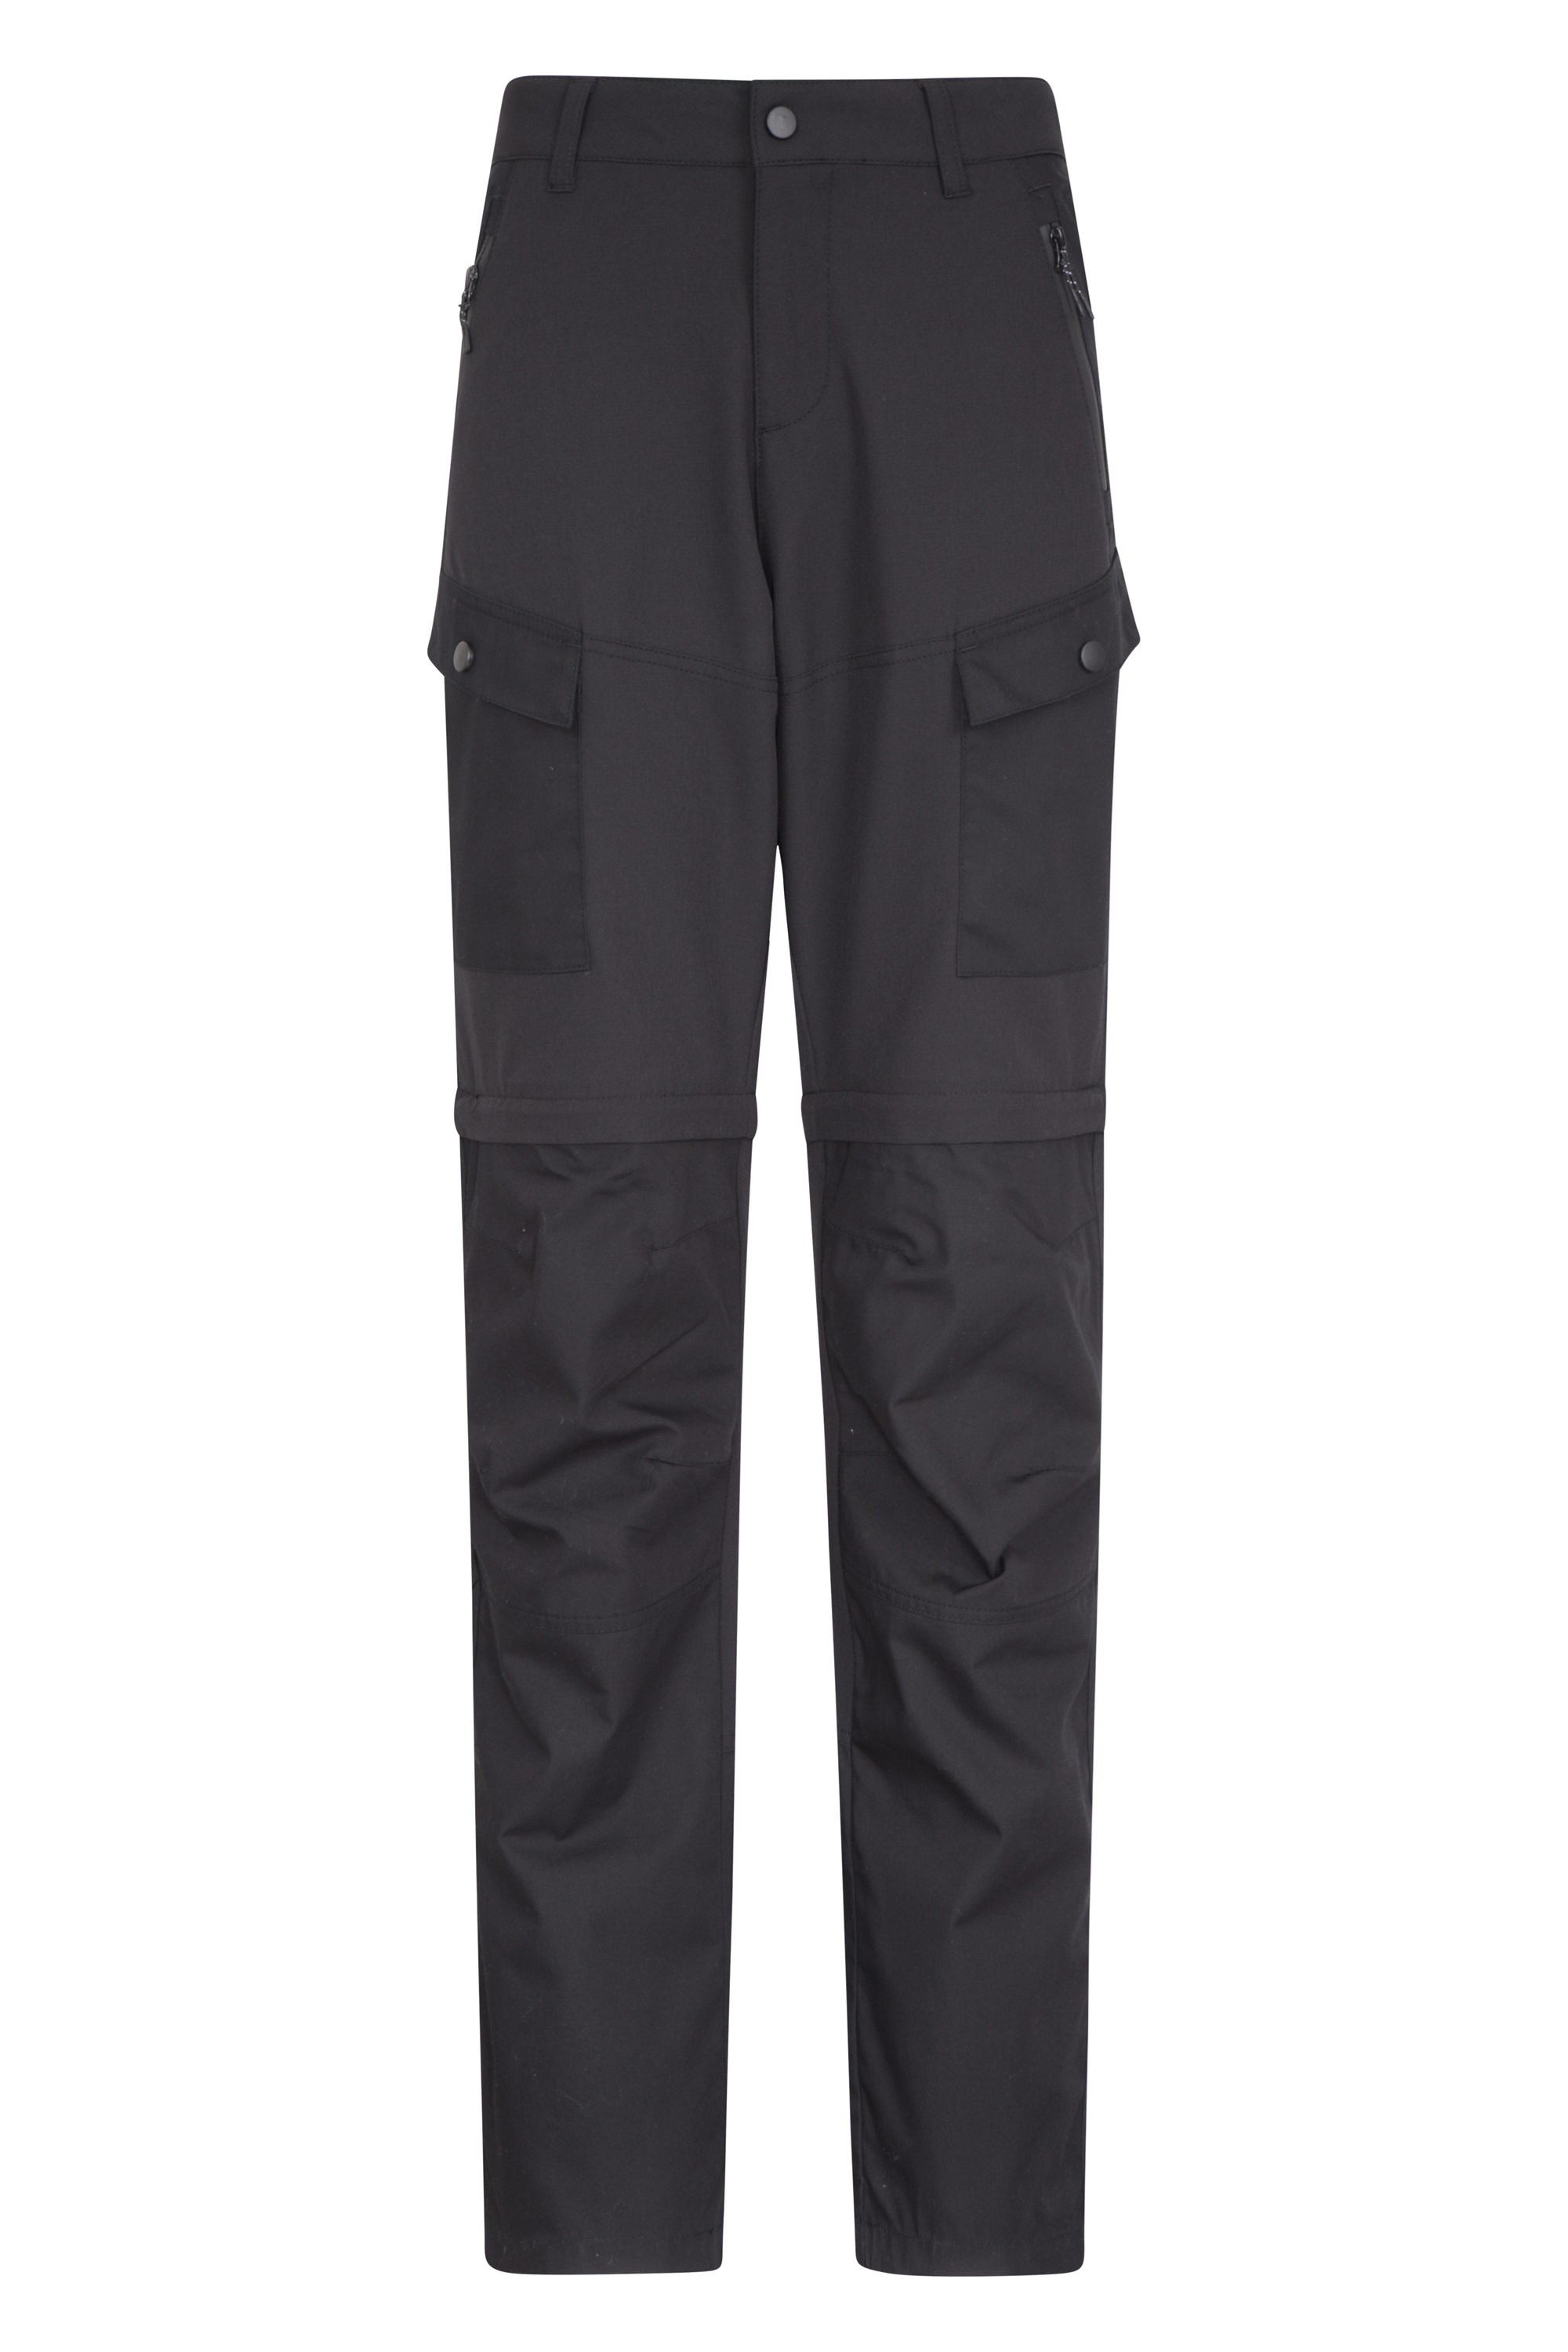 Mplus | Dare 2b - Mens Tuned In II Multi Pocket Zip Off Walking Trousers |  Black